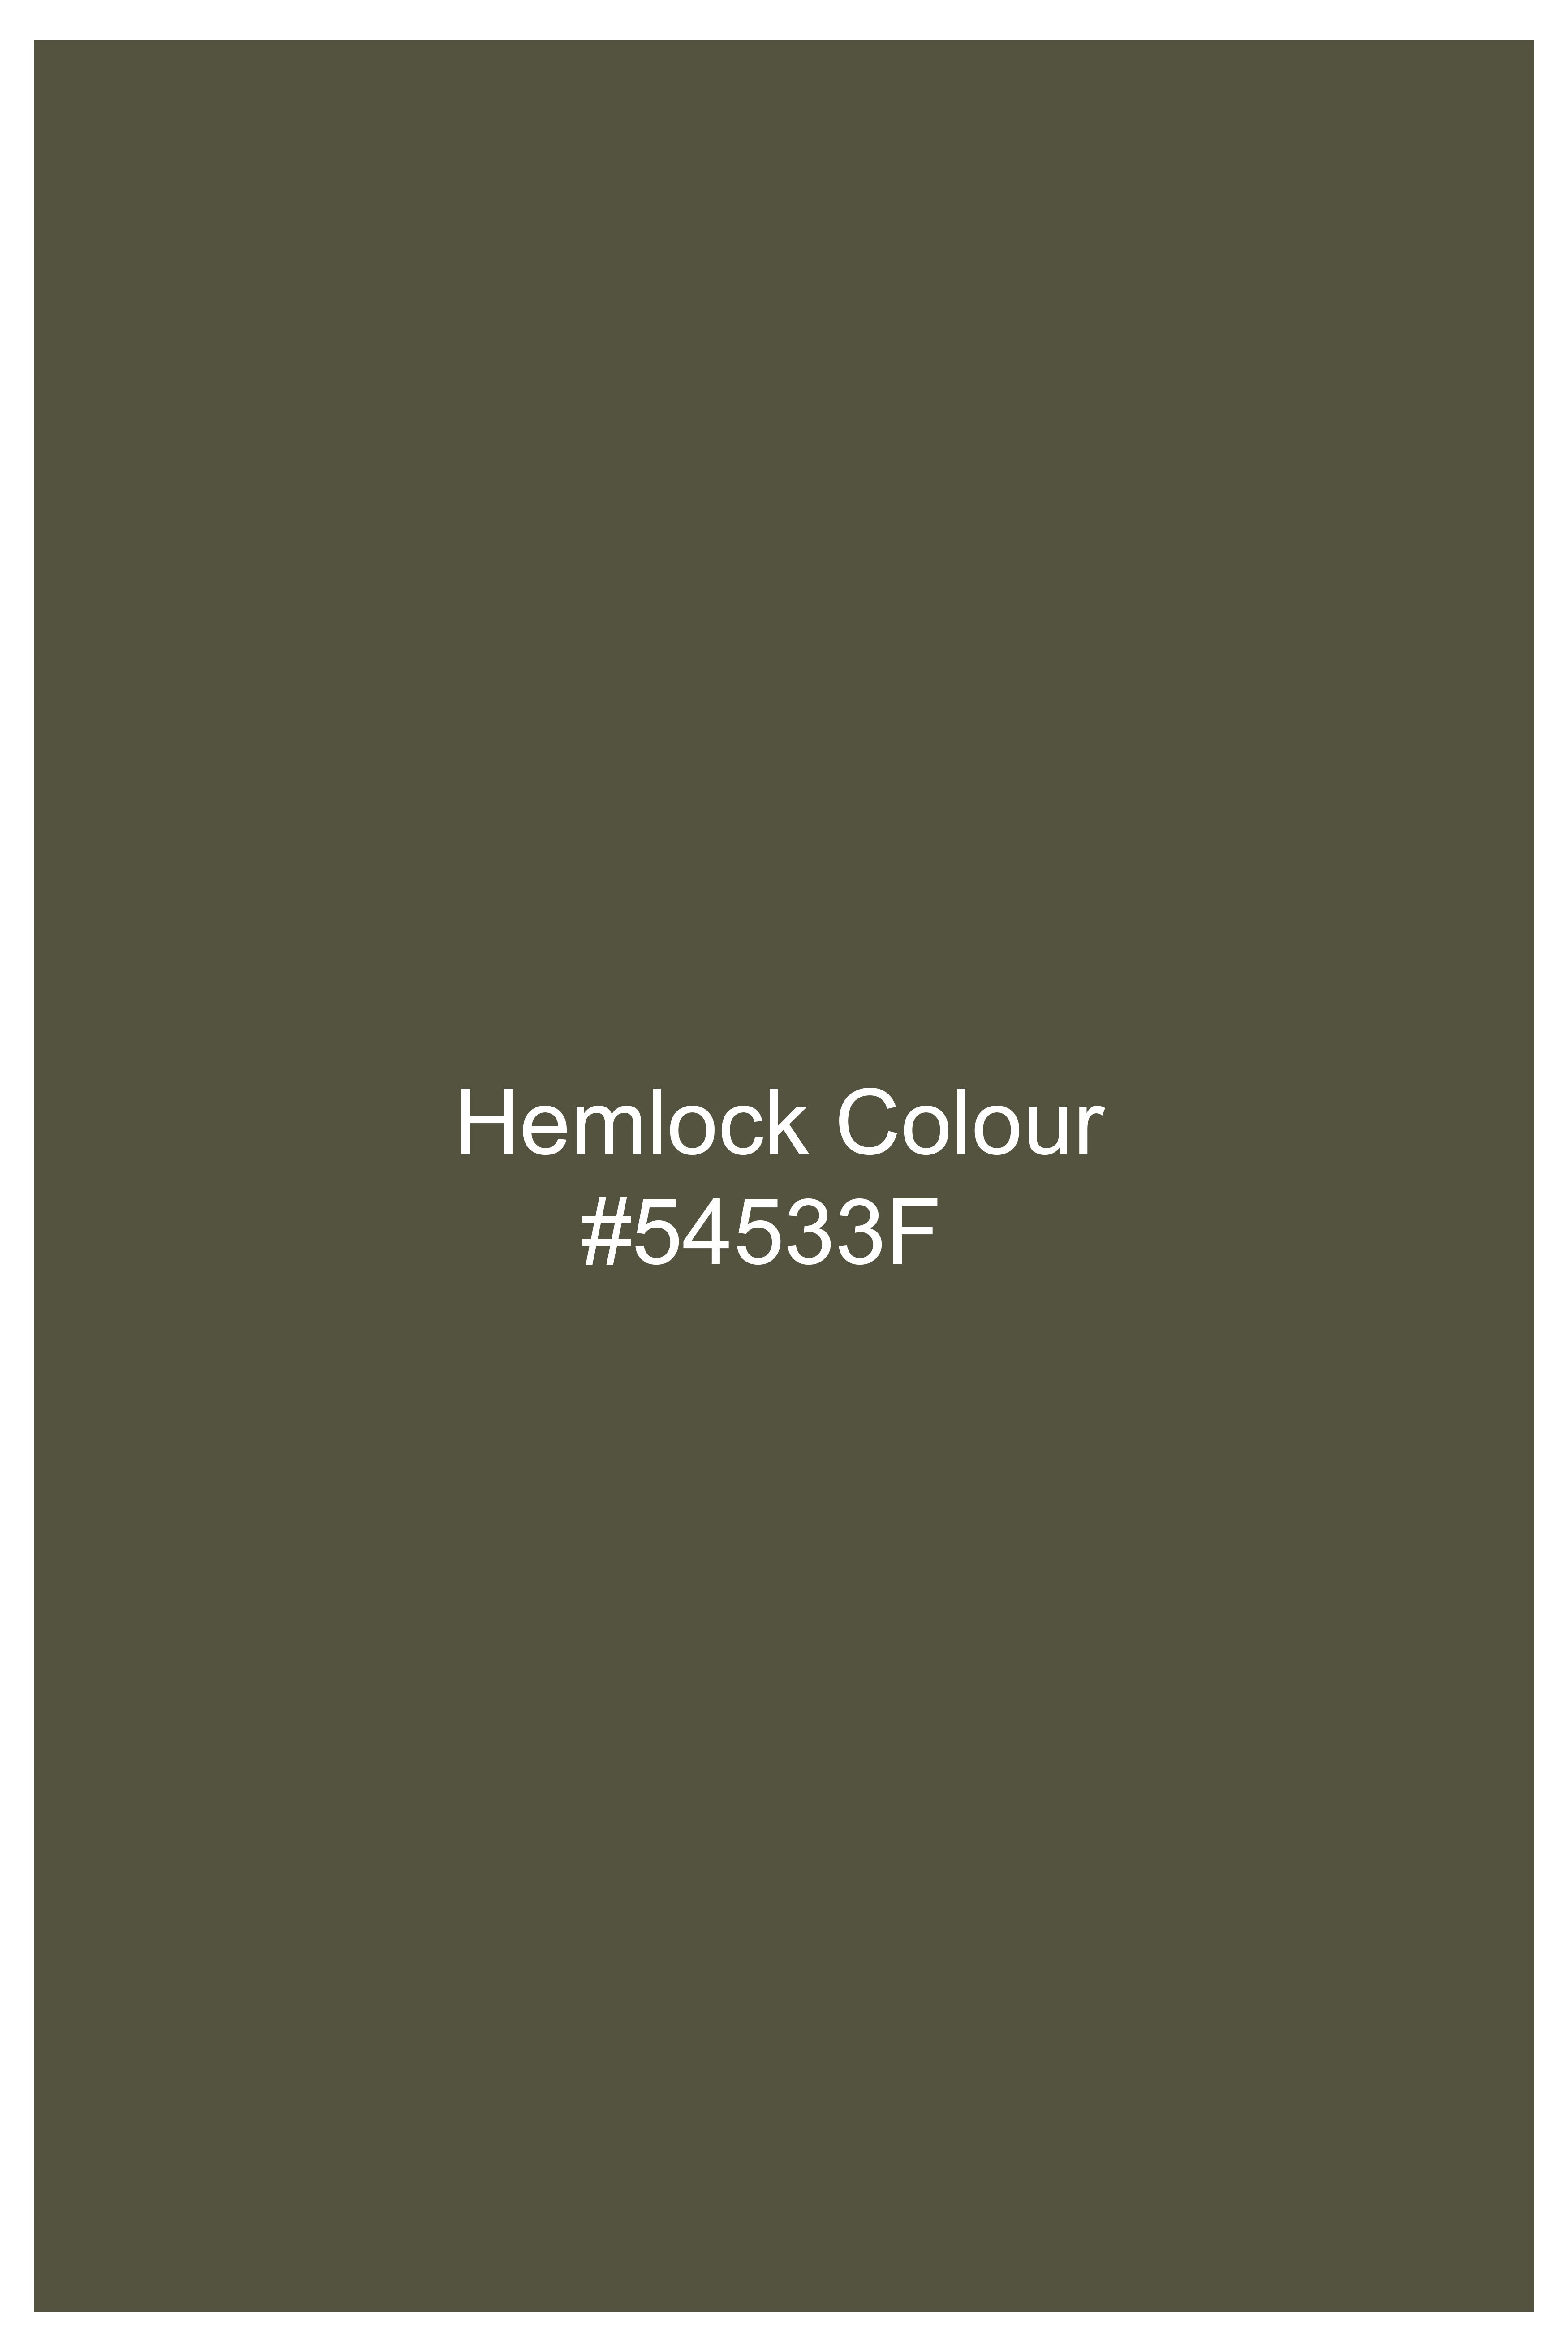 Hemlock Green Premium Cotton Bandhgala Stretchable traveler Suit ST2786-BG36, ST2786-BG38, ST2786-BG40, ST2786-BG42, ST2786-BG44, ST2786-BG46, ST2786-BG48, ST2786-BG50, ST2786-BG52, ST2786-BG54, ST2786-BG56, ST2786-BG58, ST2786-BG60